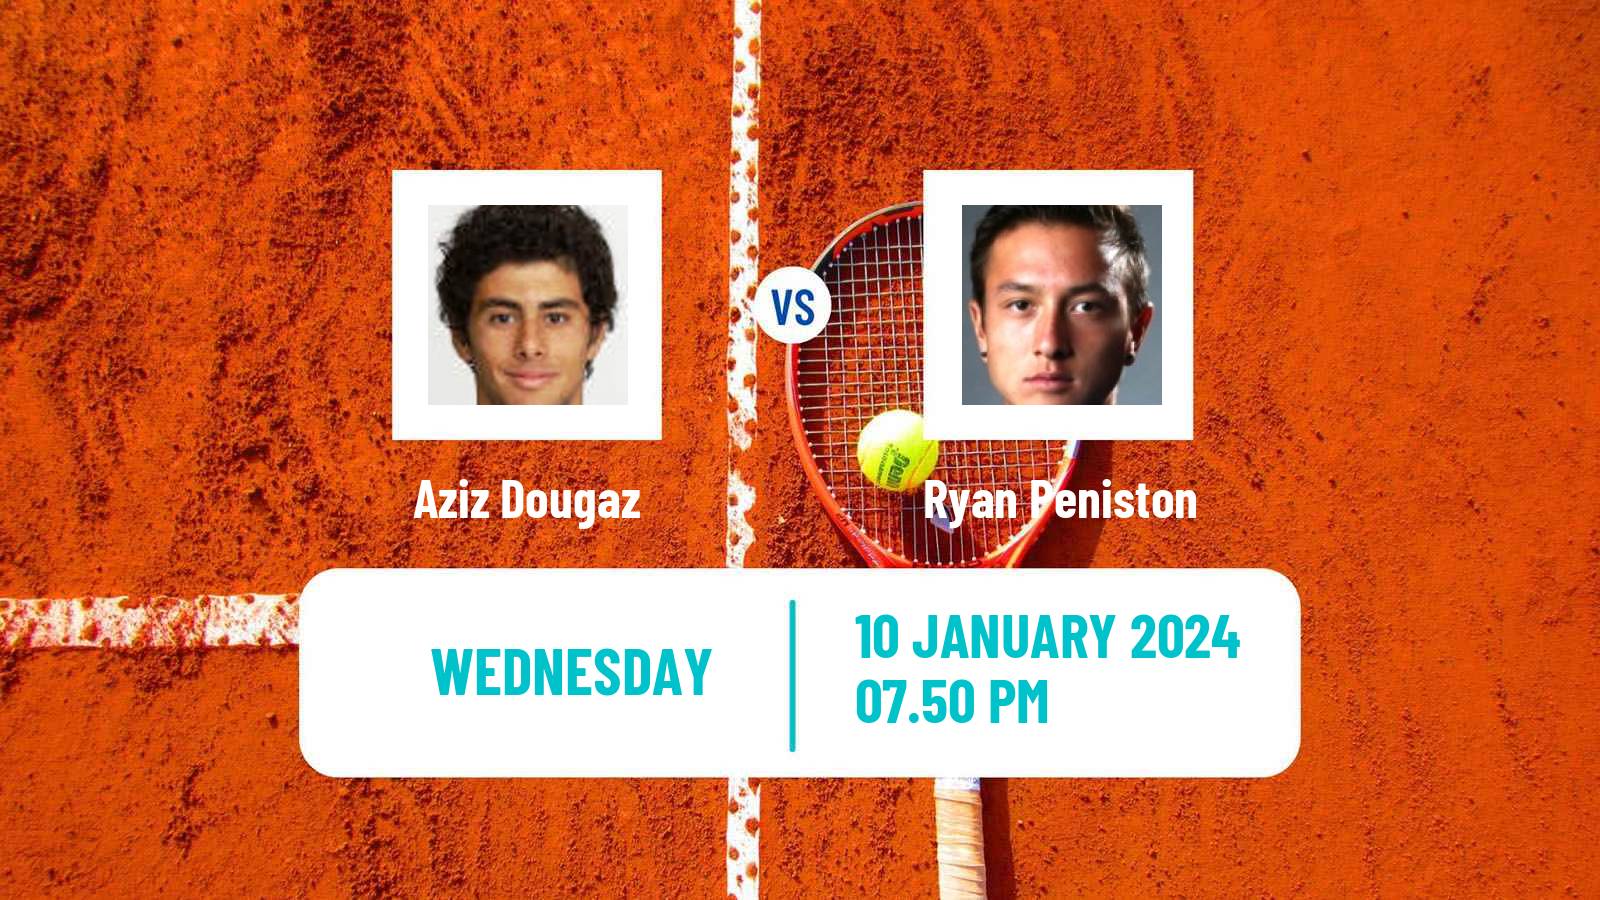 Tennis ATP Australian Open Aziz Dougaz - Ryan Peniston